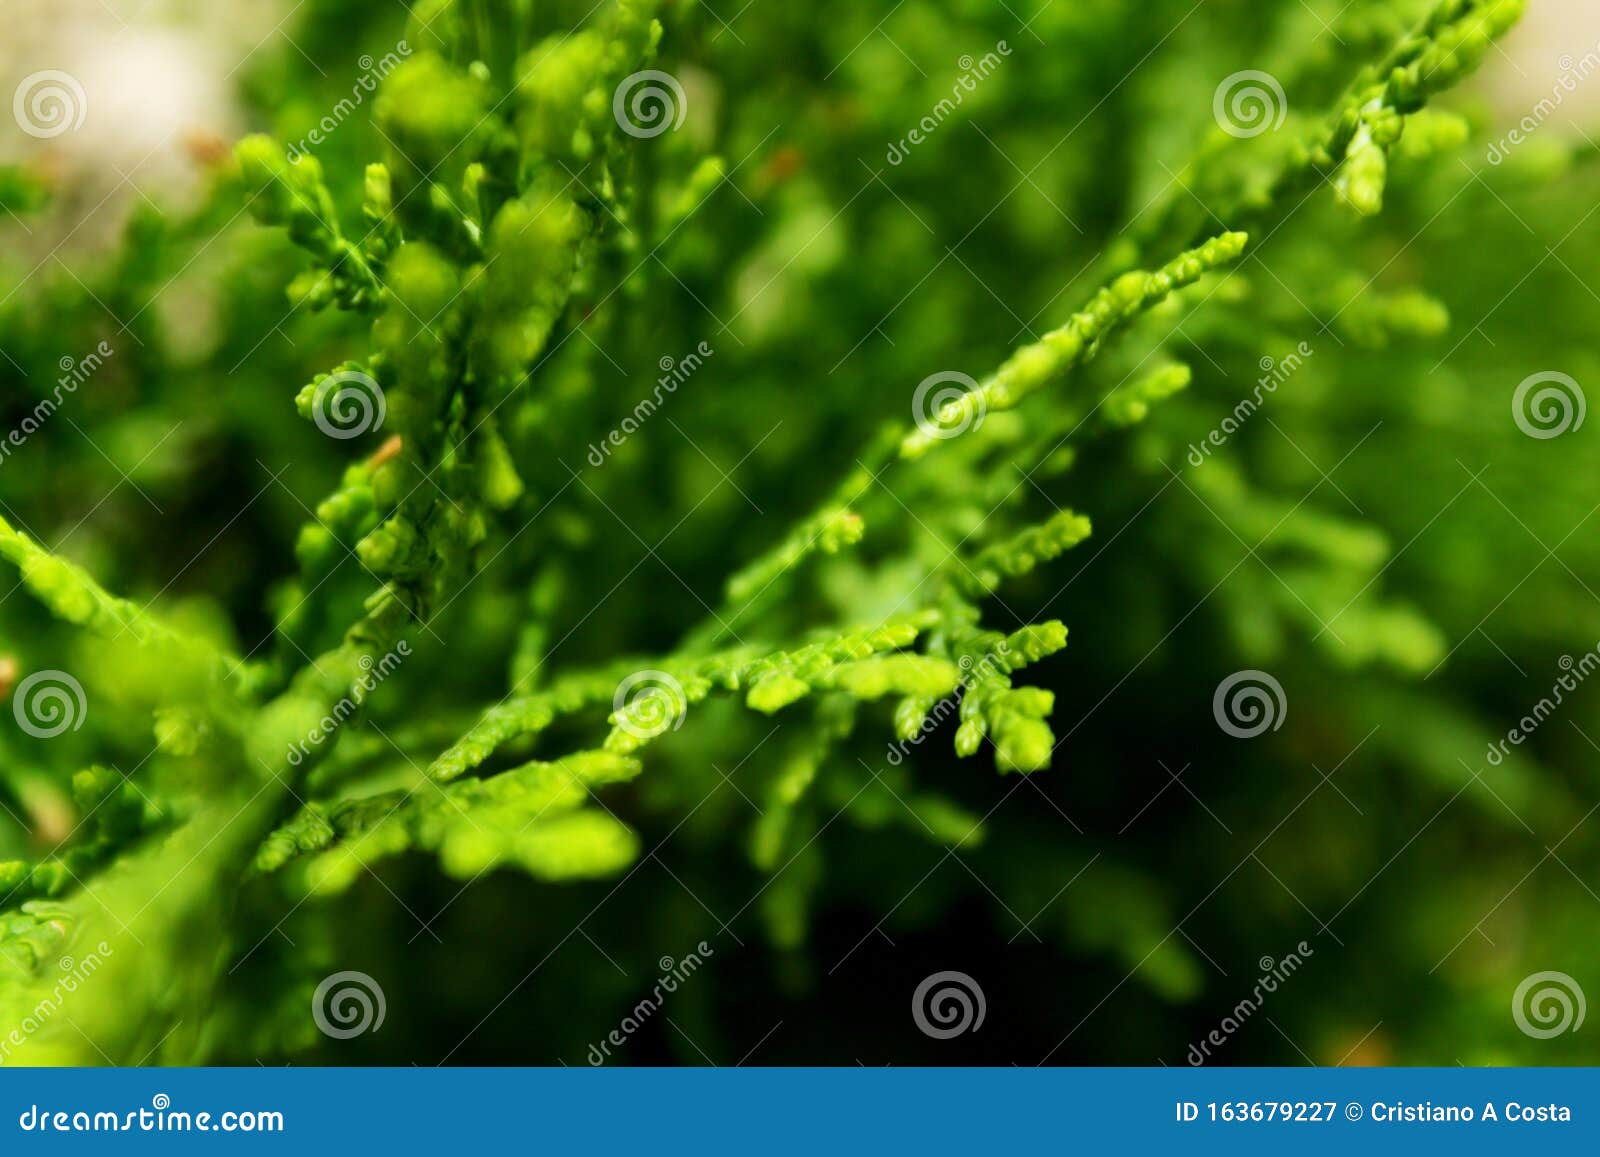 green plant leaves that look like pine tree